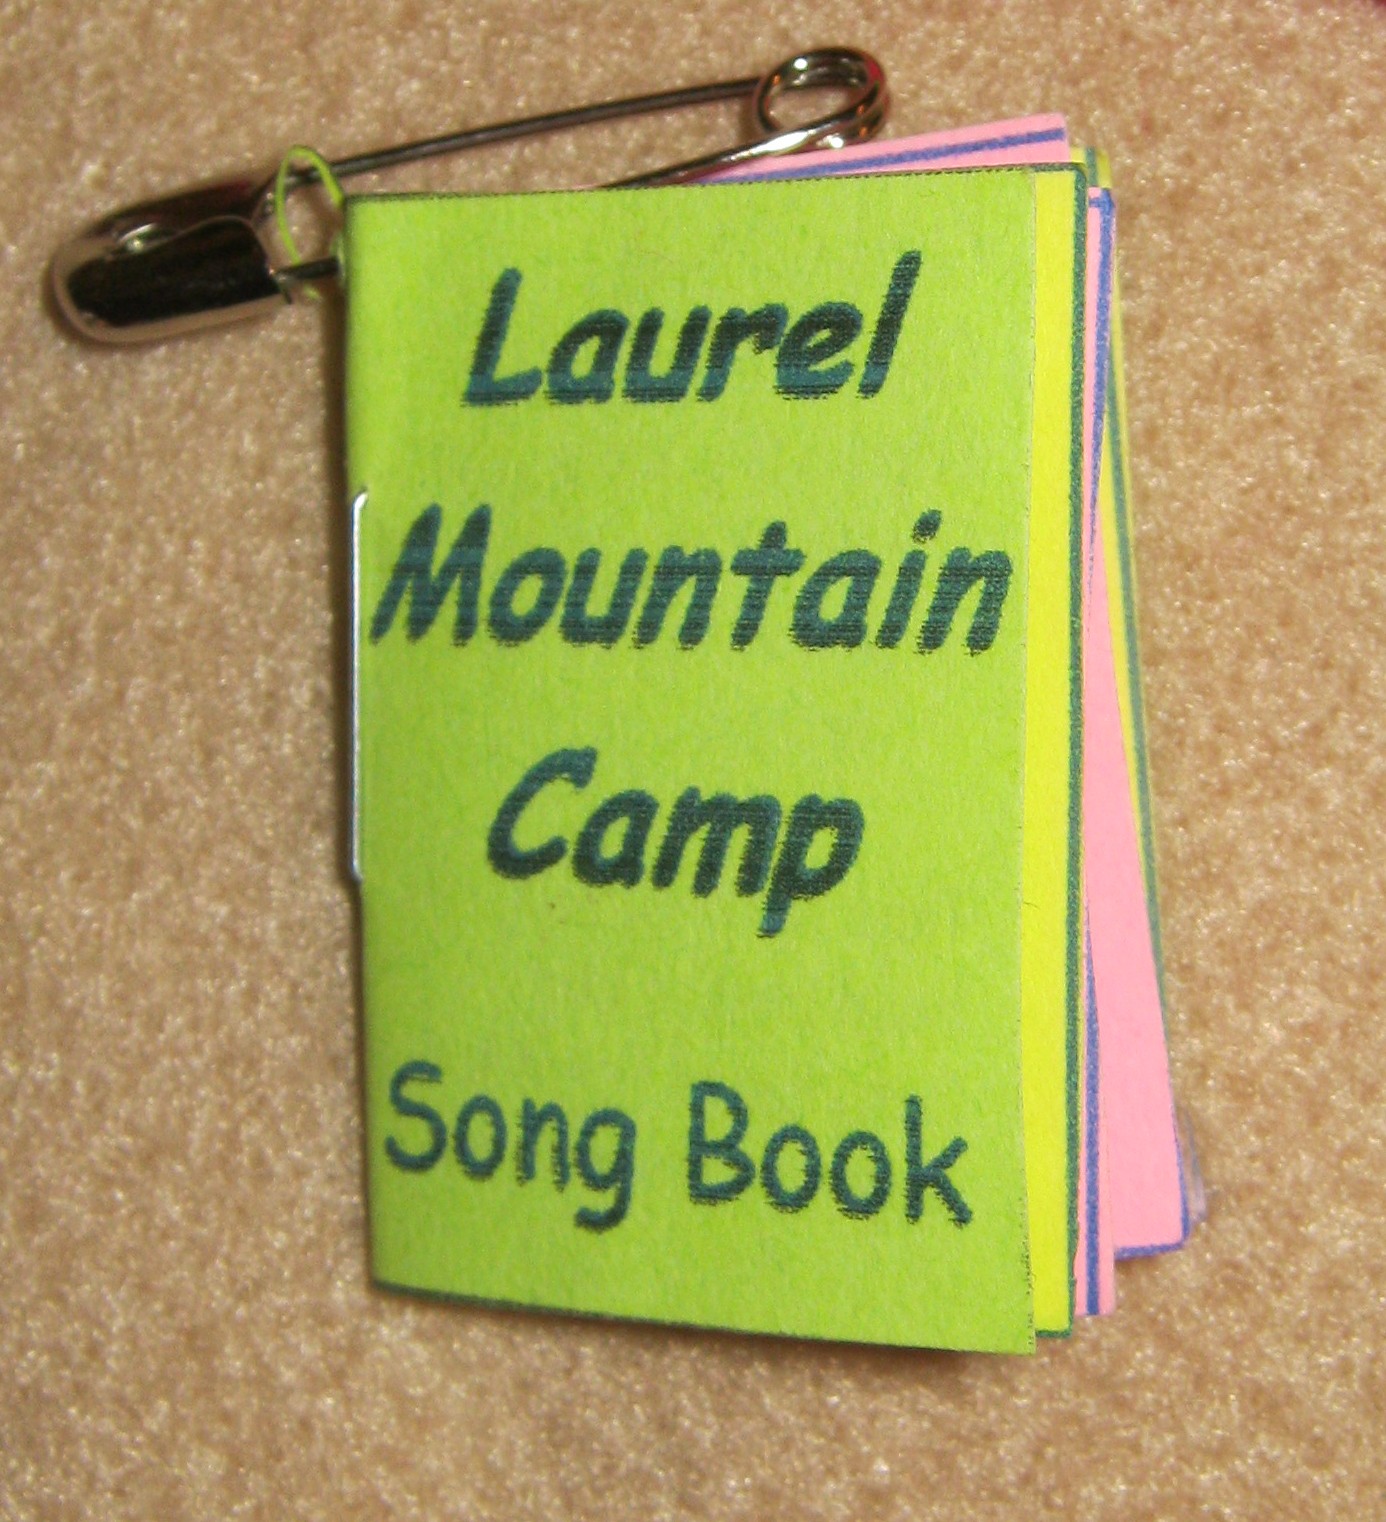 Camp Song Book Swap